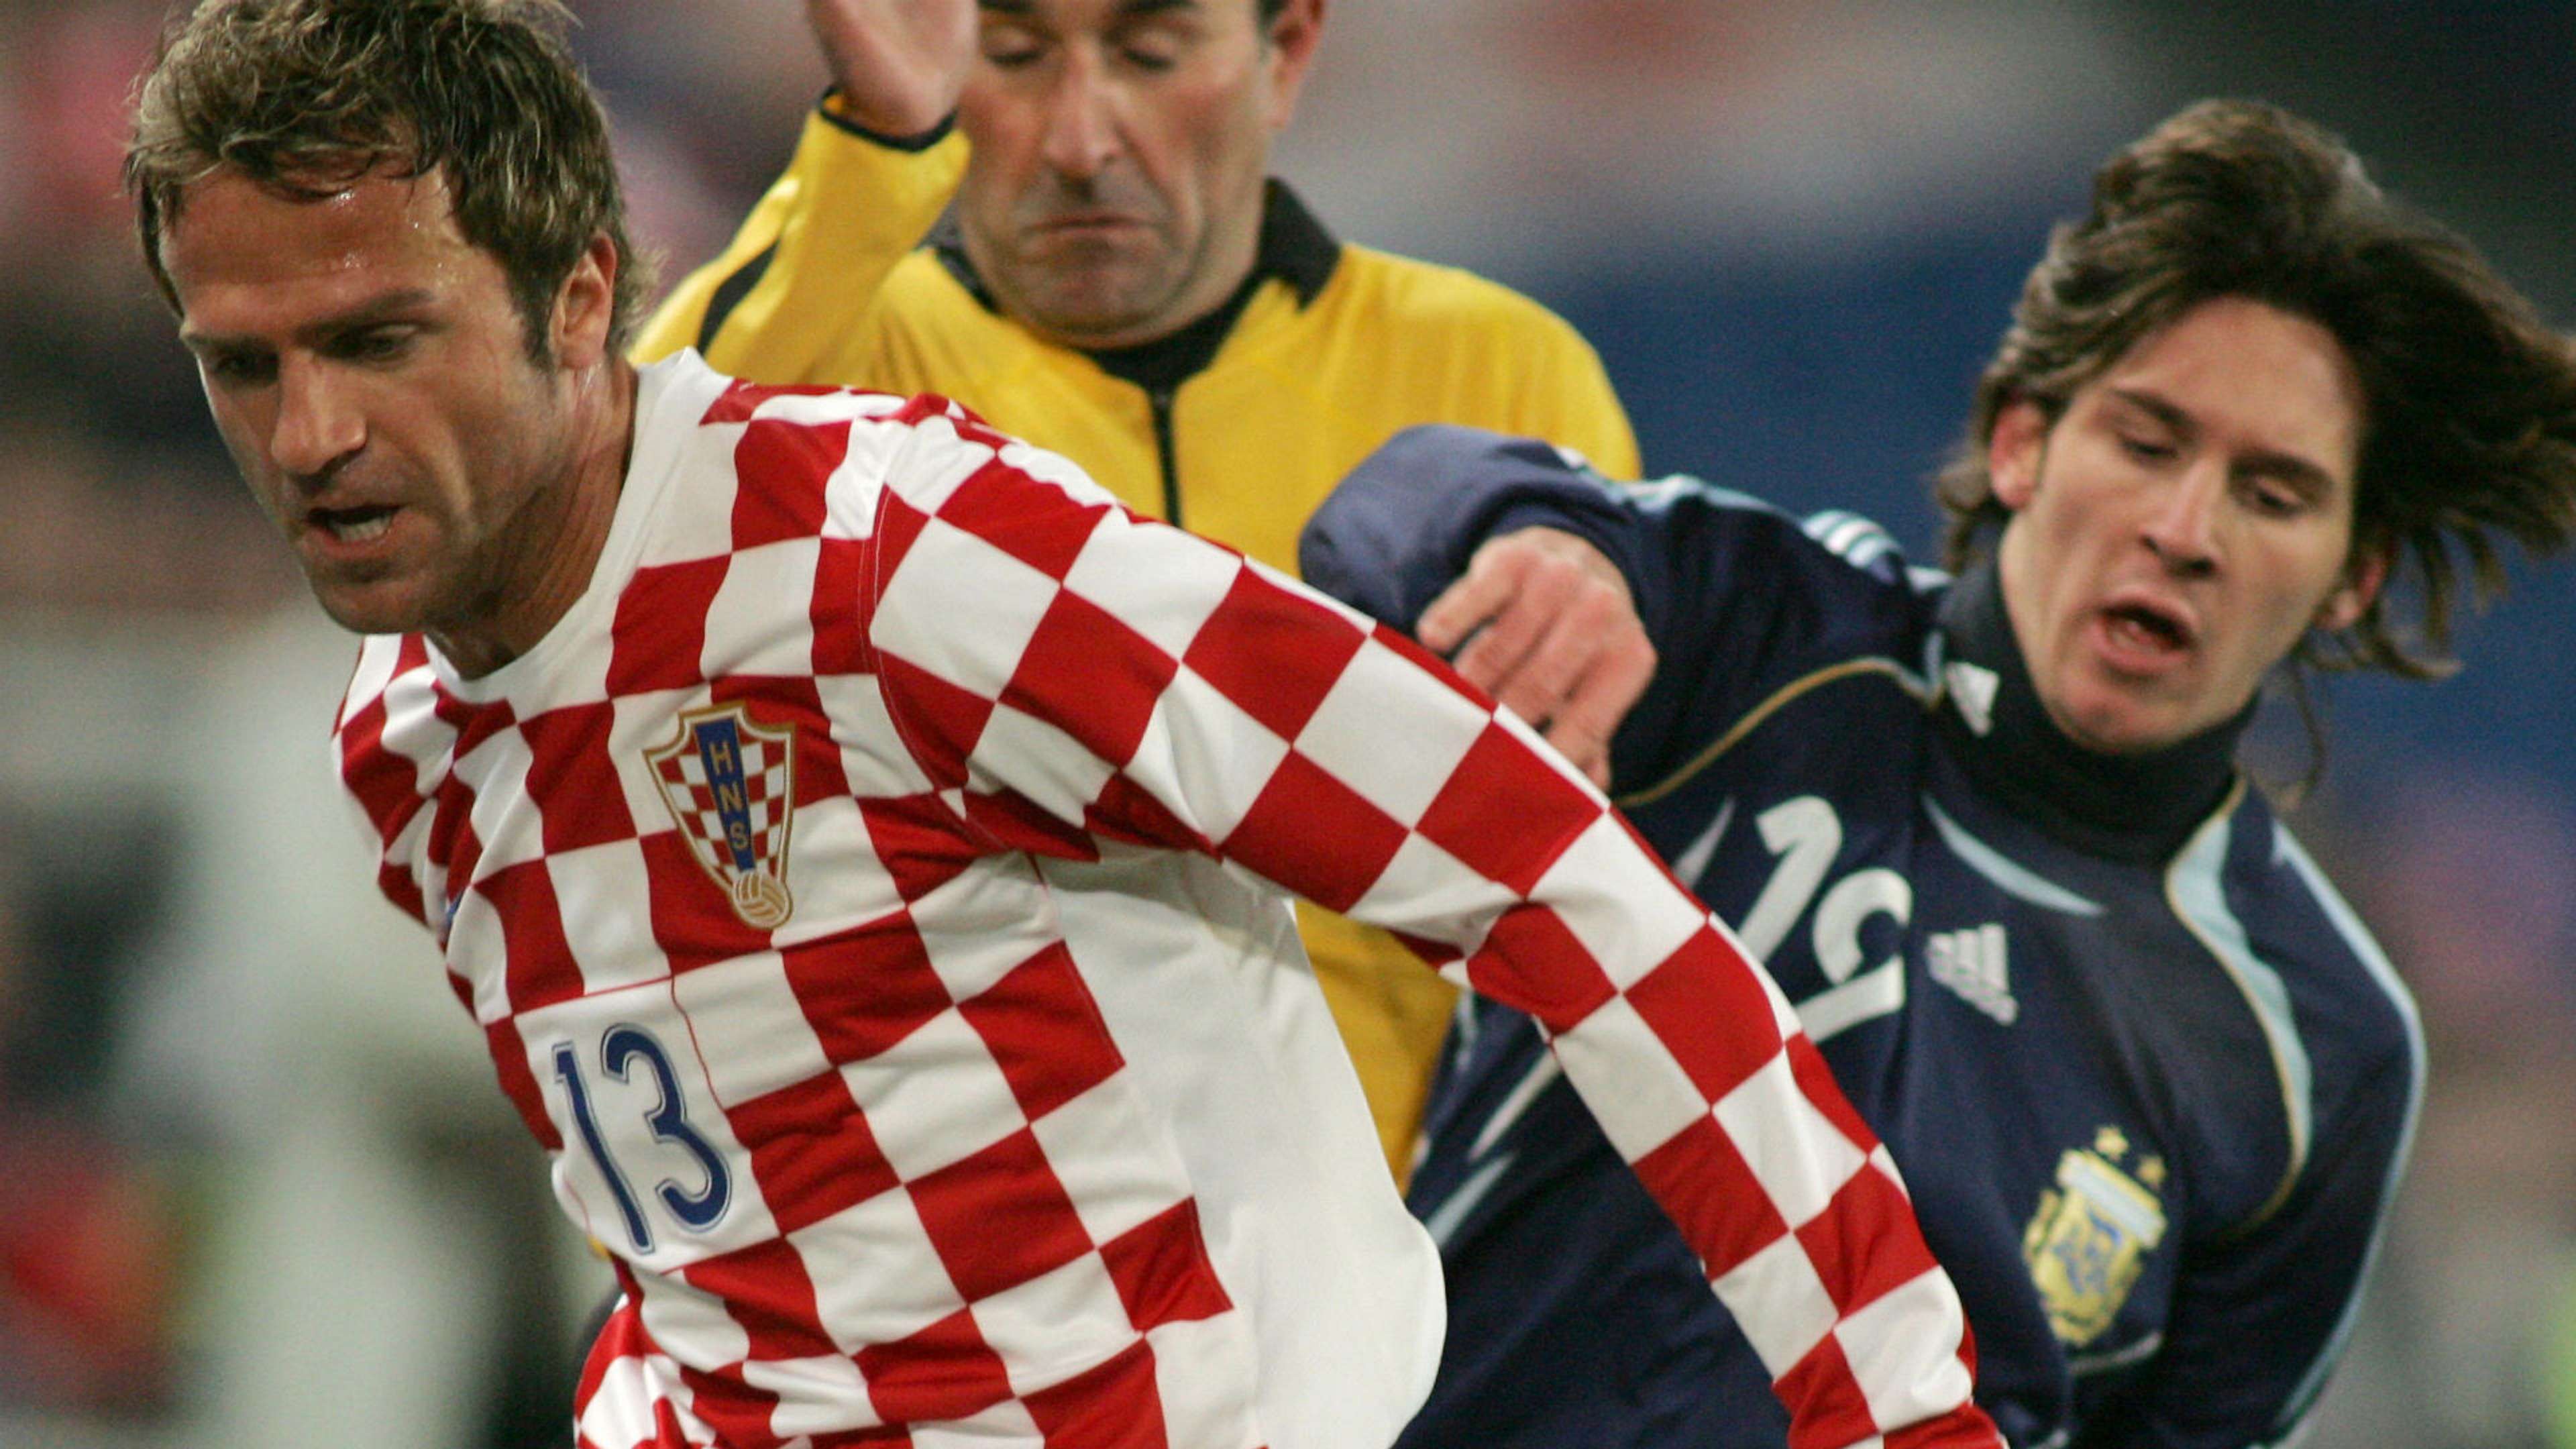 Hrvatska Argentina 2006. Stjepan Tomas Leo Messi